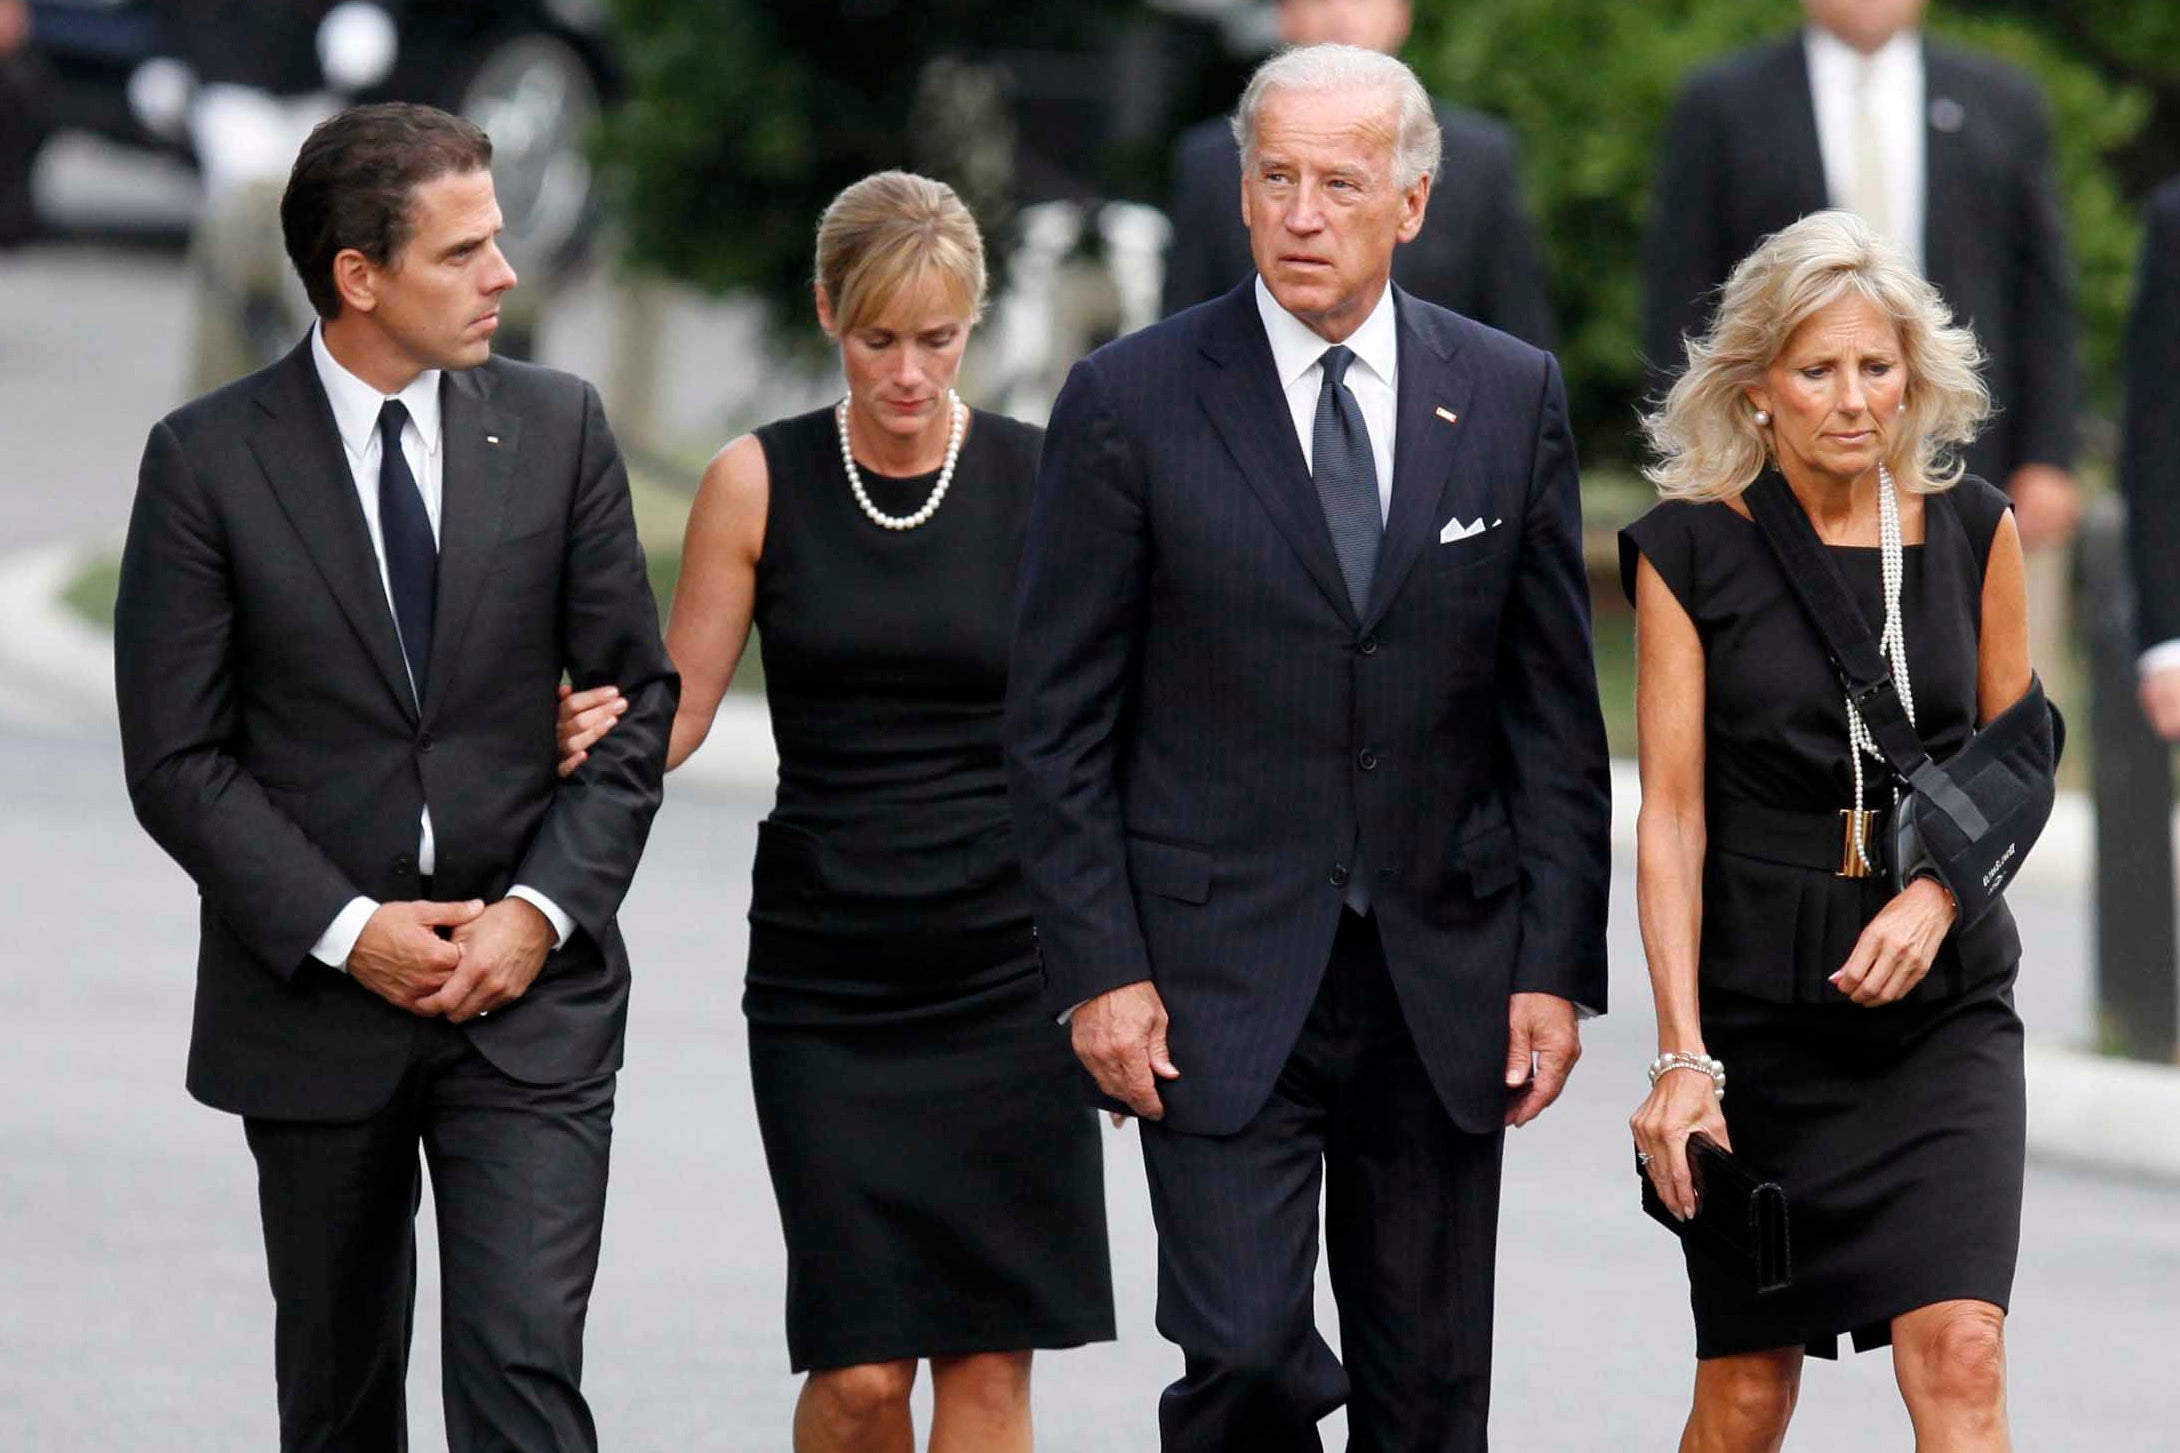 Hunter Biden (far left) walks with his then-wife Kathleen Buhle (center left) in 2009